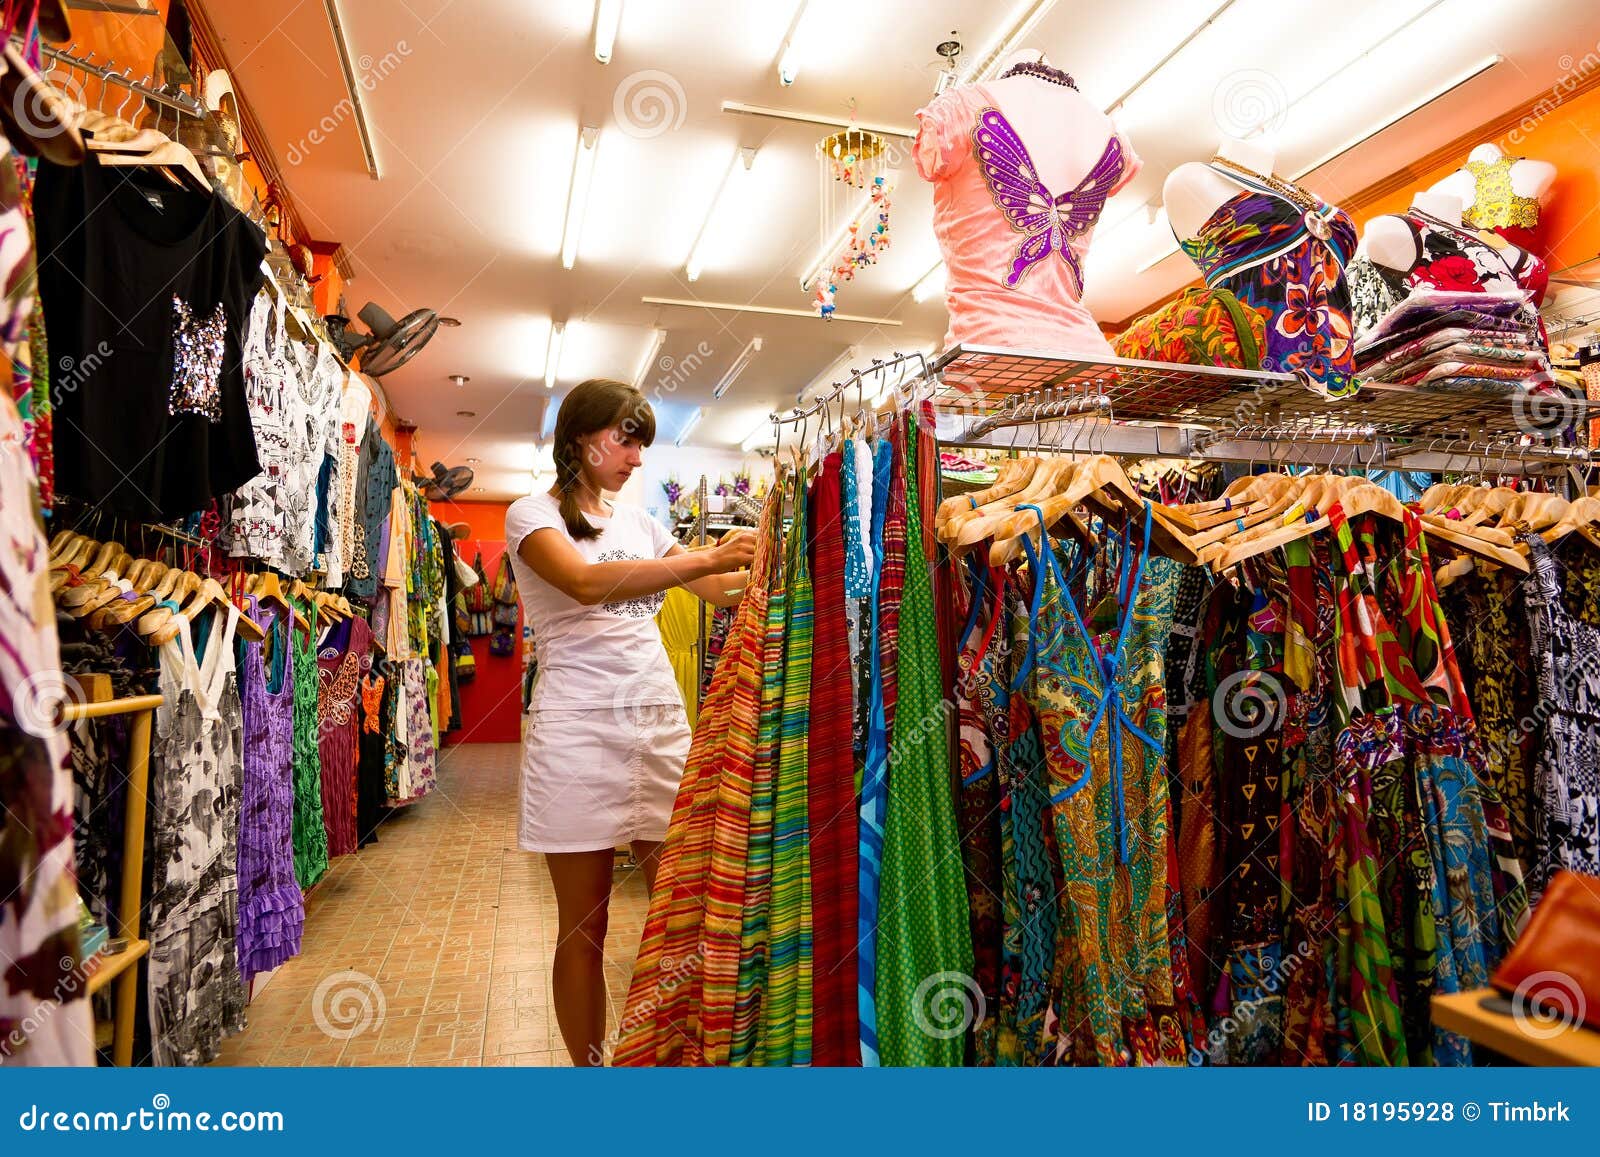 Shopping stock photo. Image of retail, garment, hanger - 18195928